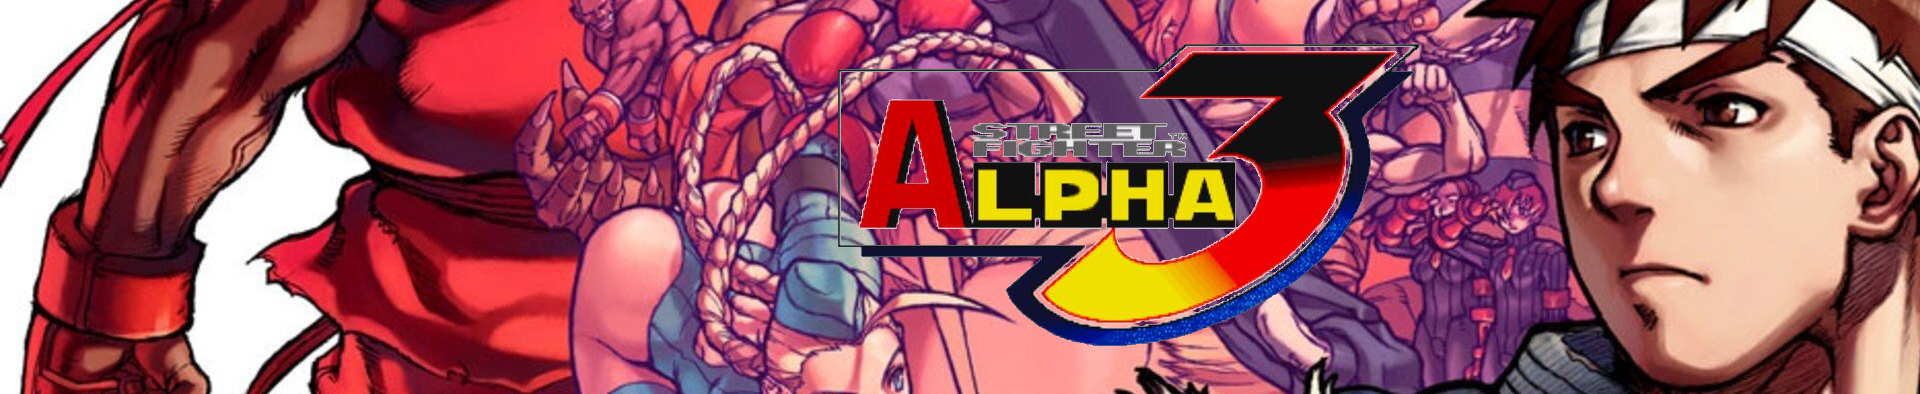 Banner Street Fighter Alpha 3